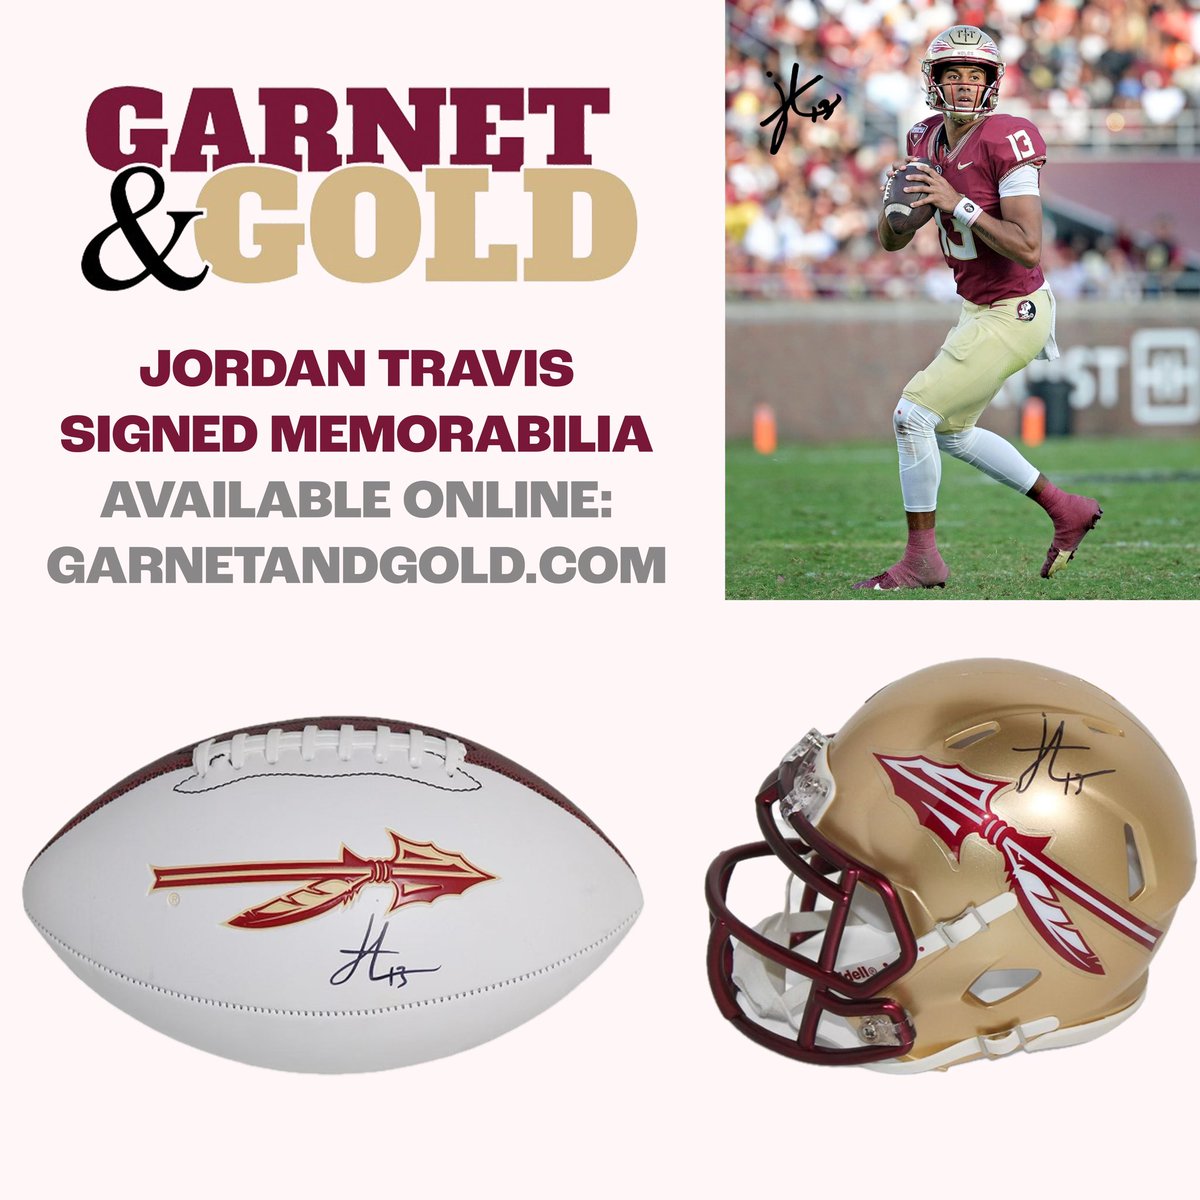 Jordan Travis signed memorabilia available again online for a limited time only at garnetandgold.com/search?type=pr… @garnetandgold @jordantrav13 @FSUFootball @Seminoles #FSUTwitter #GoNoles